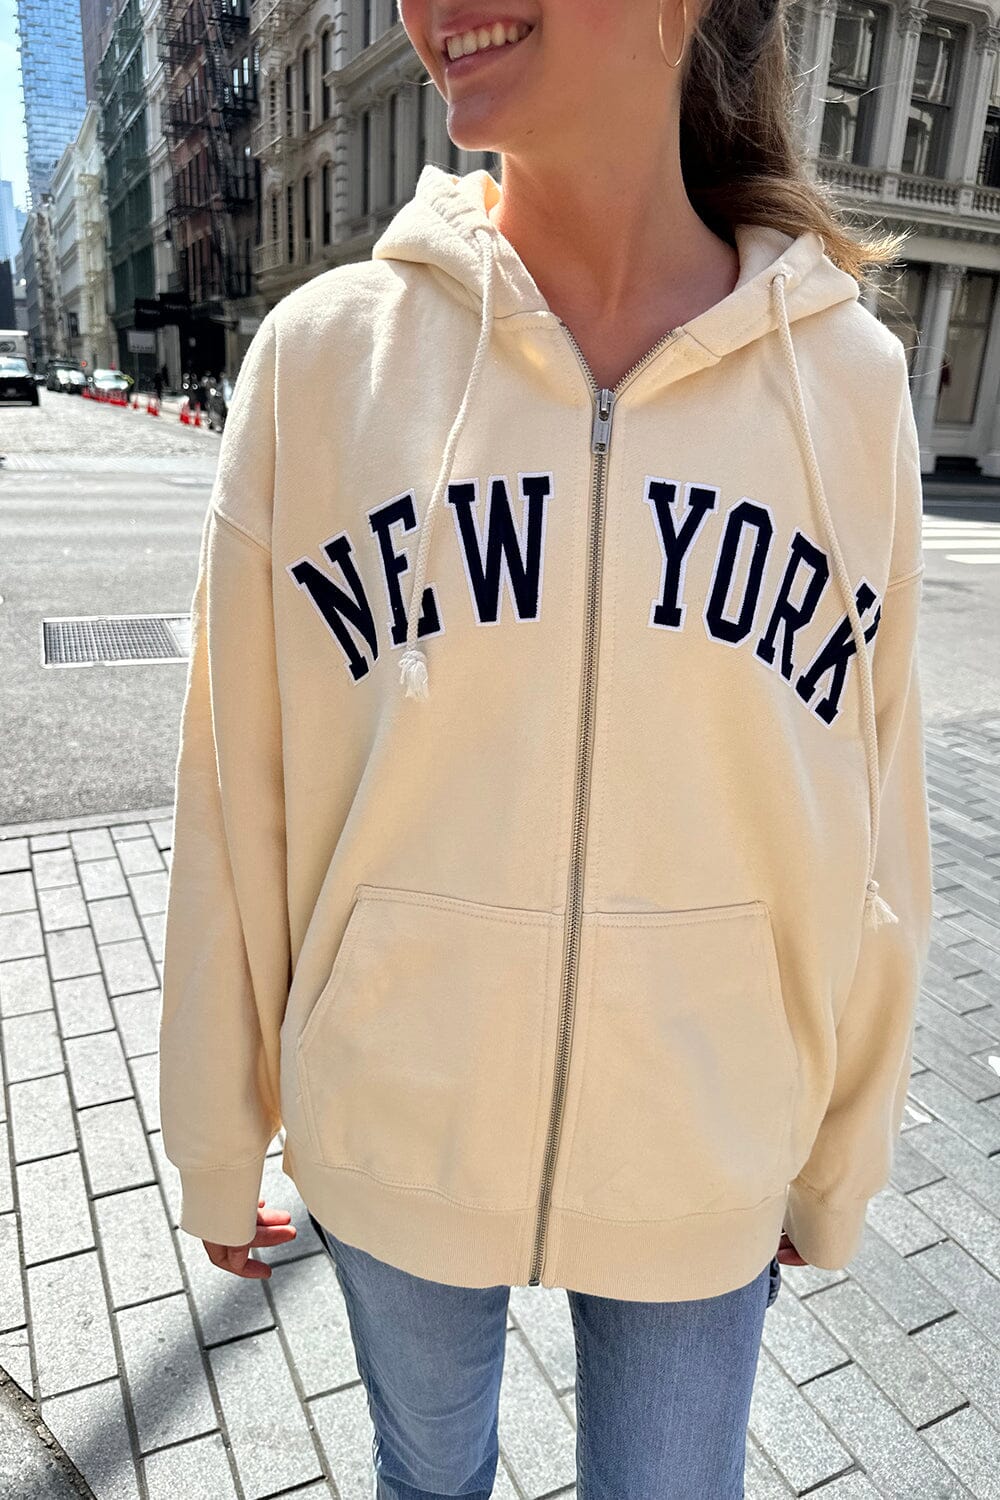 new york hoodie